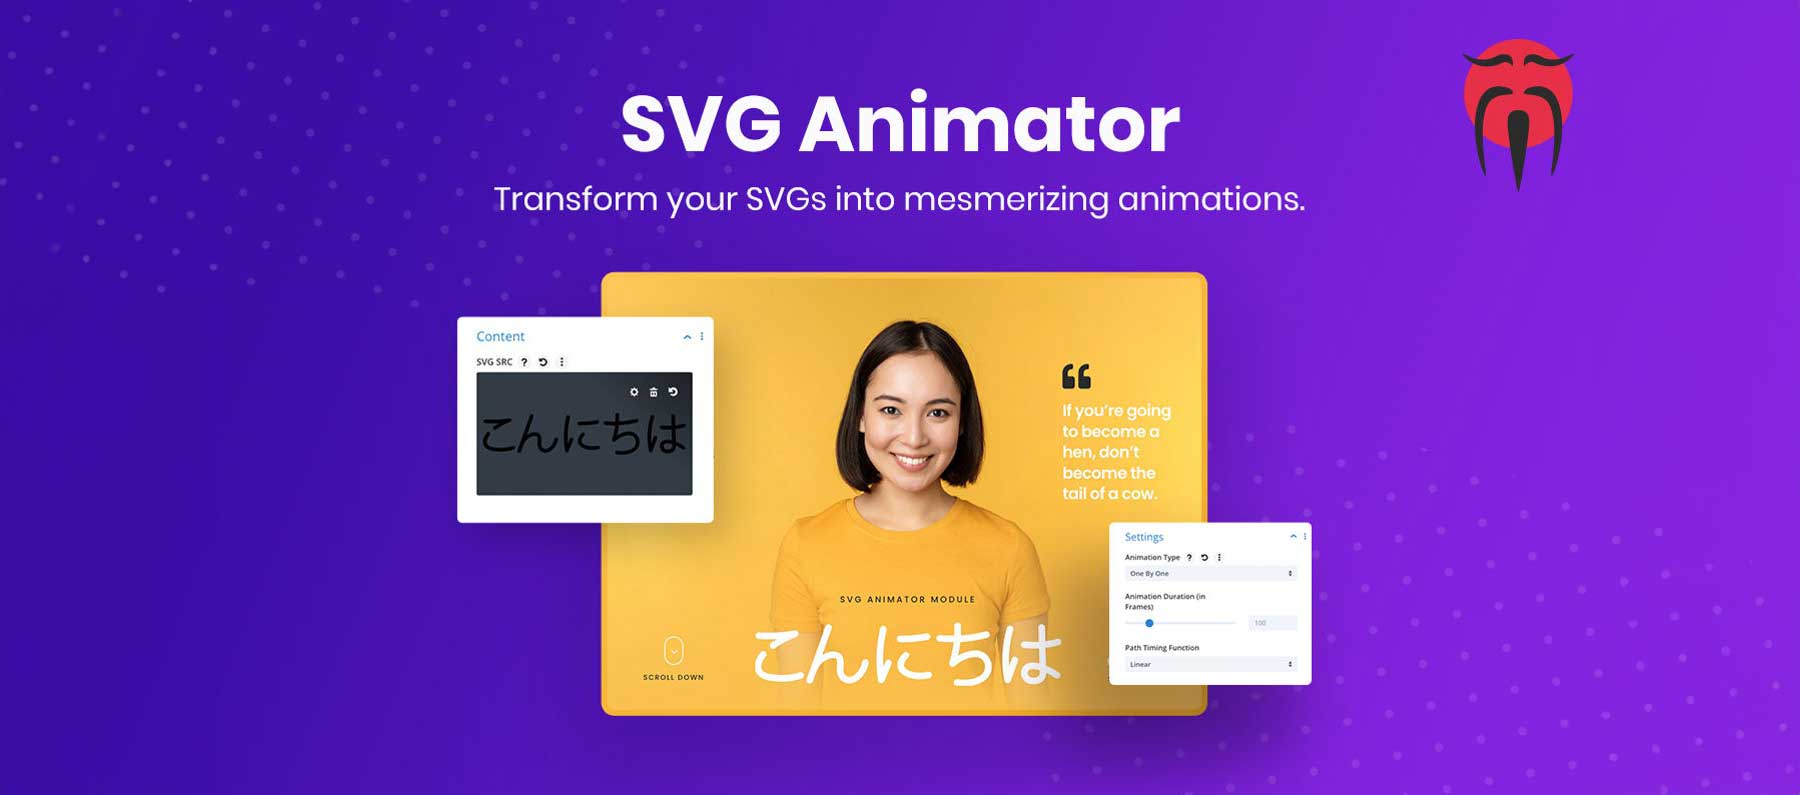 SVG Animator